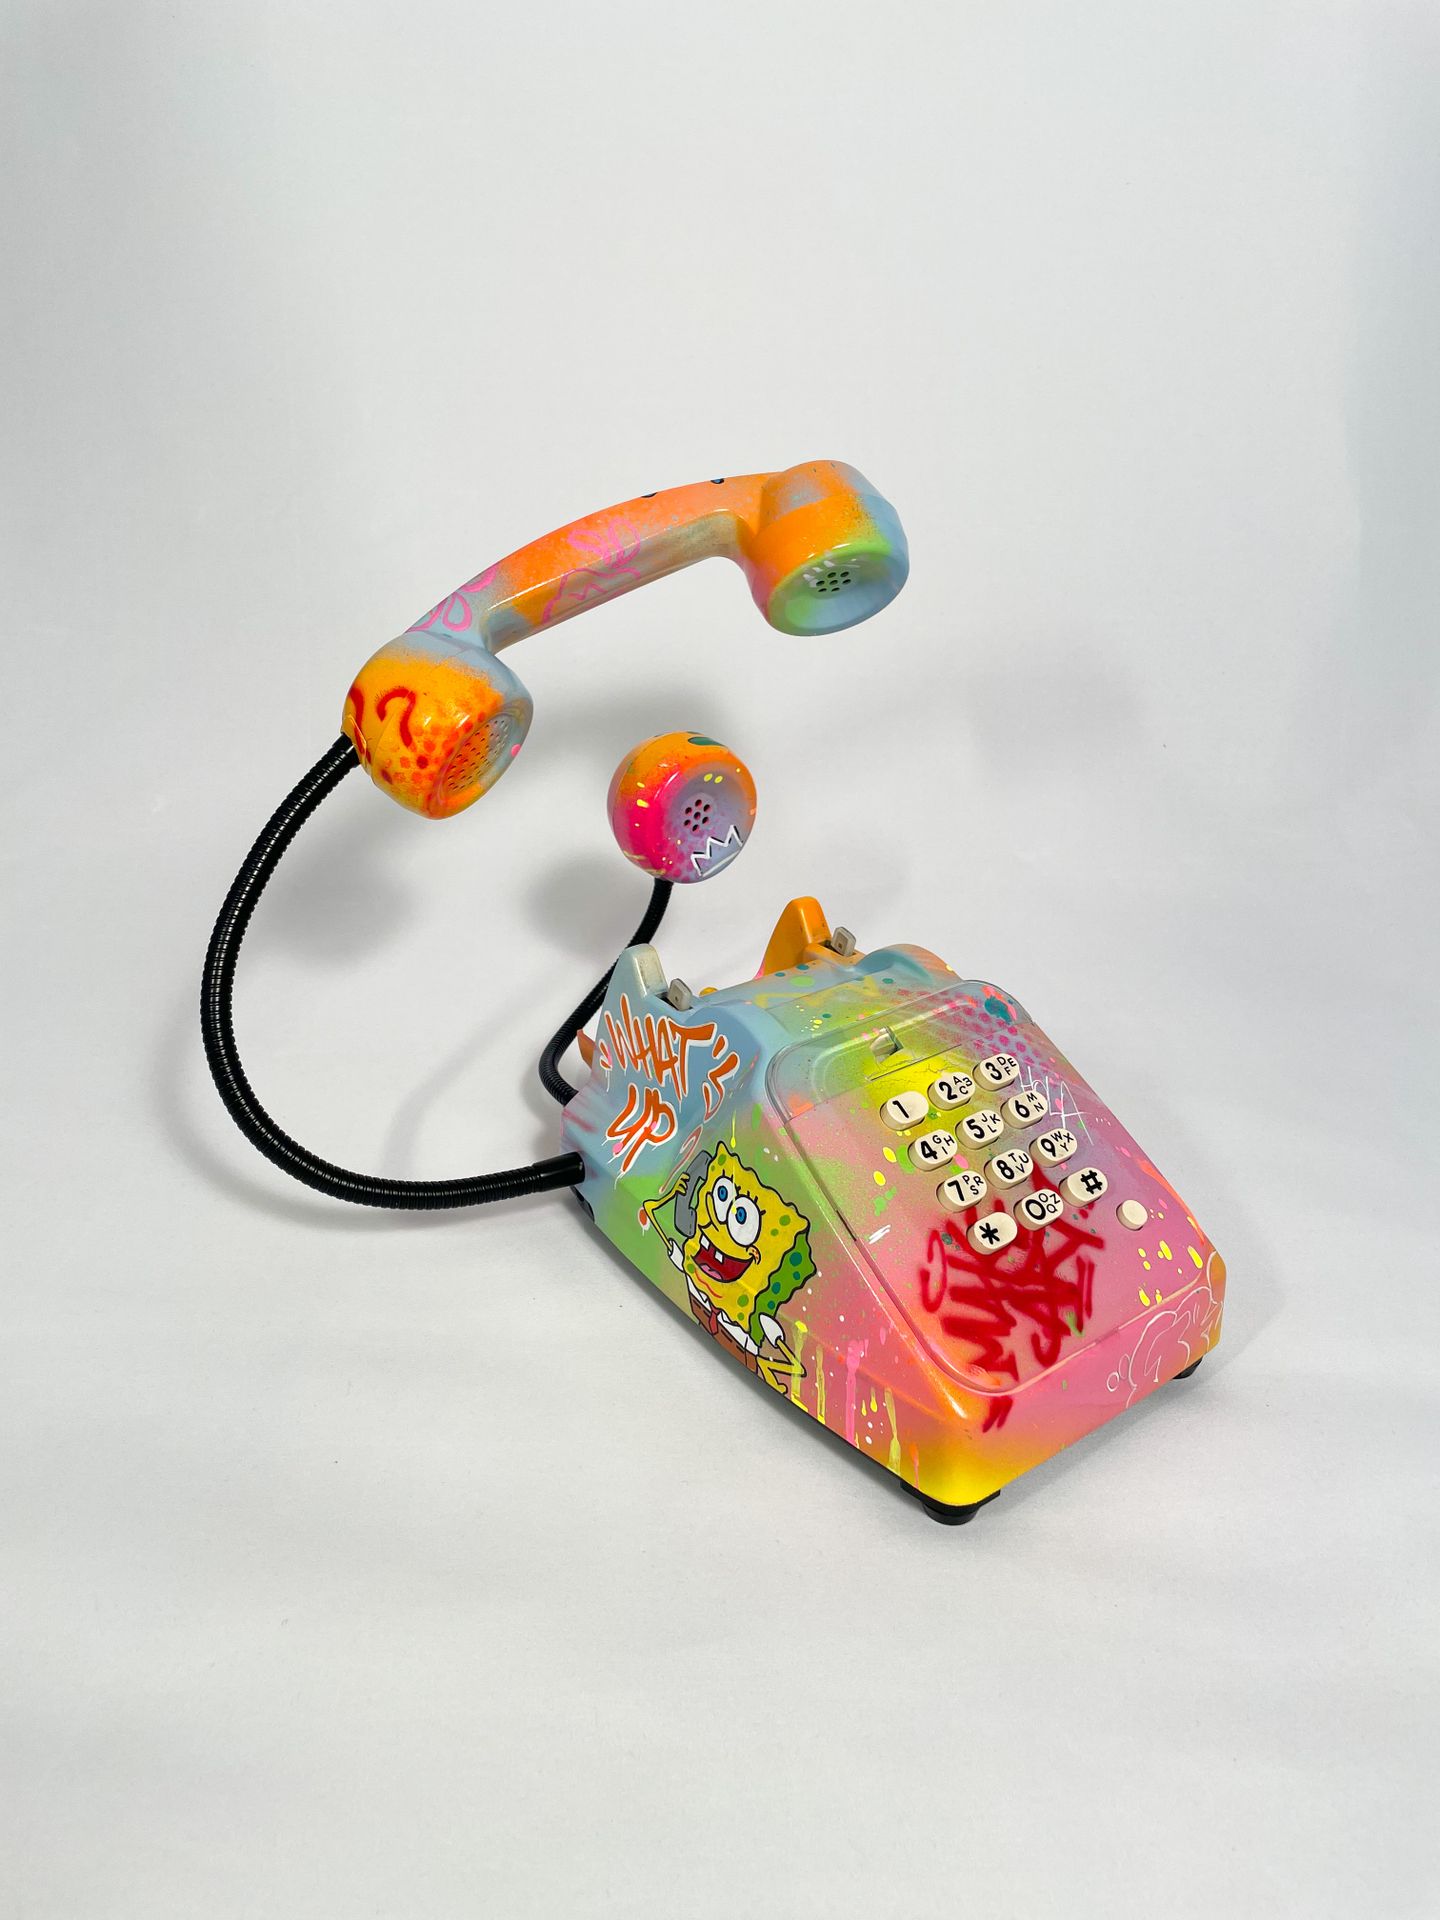 ANTHONY GRIP Bob Phone -

Mischtechnik auf einem Telefon: 

Acryl, Spraydose

Im&hellip;